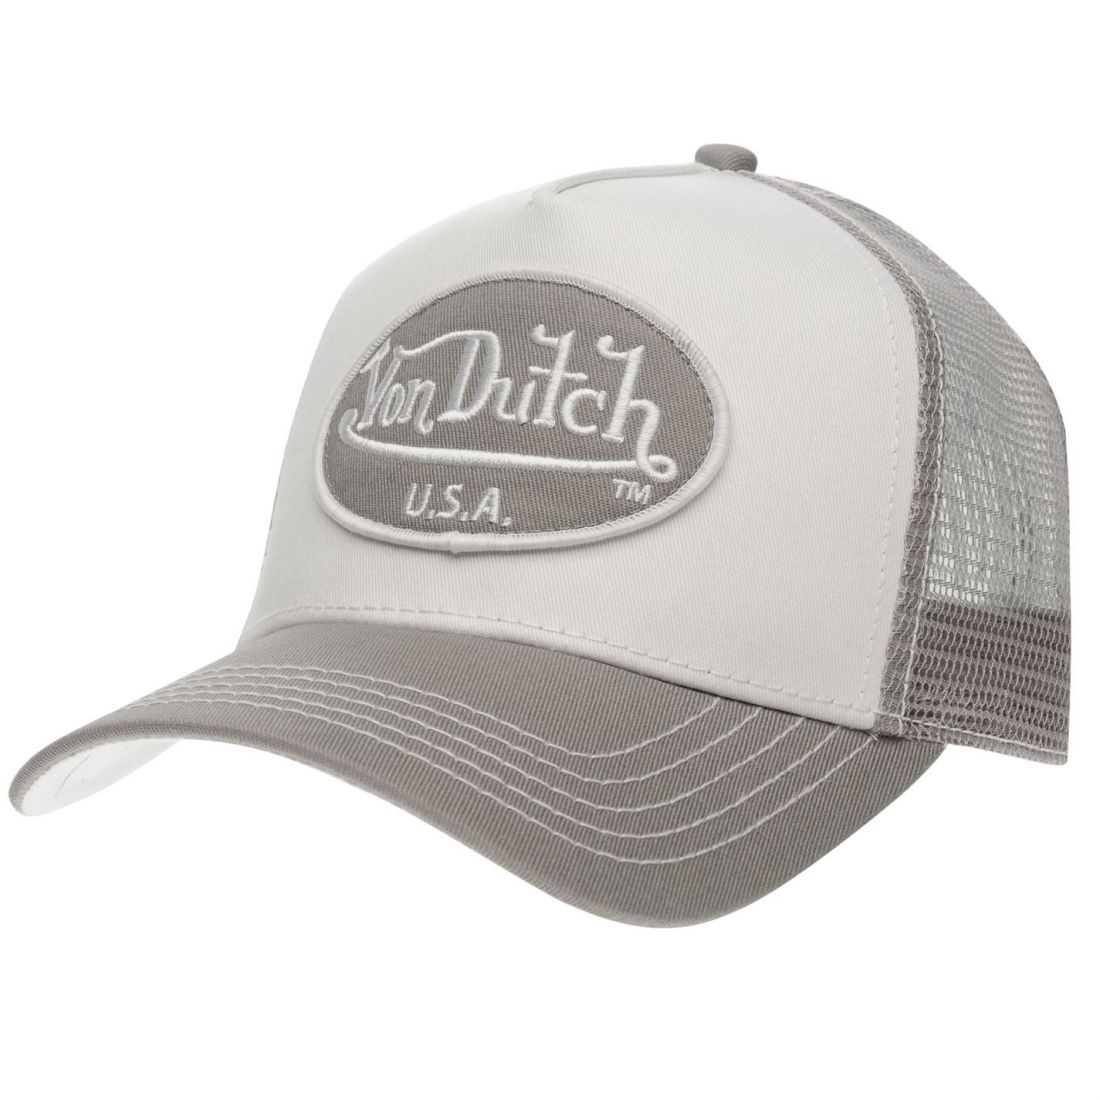 Mens Von Dutch Logo Cap Baseball New | eBay